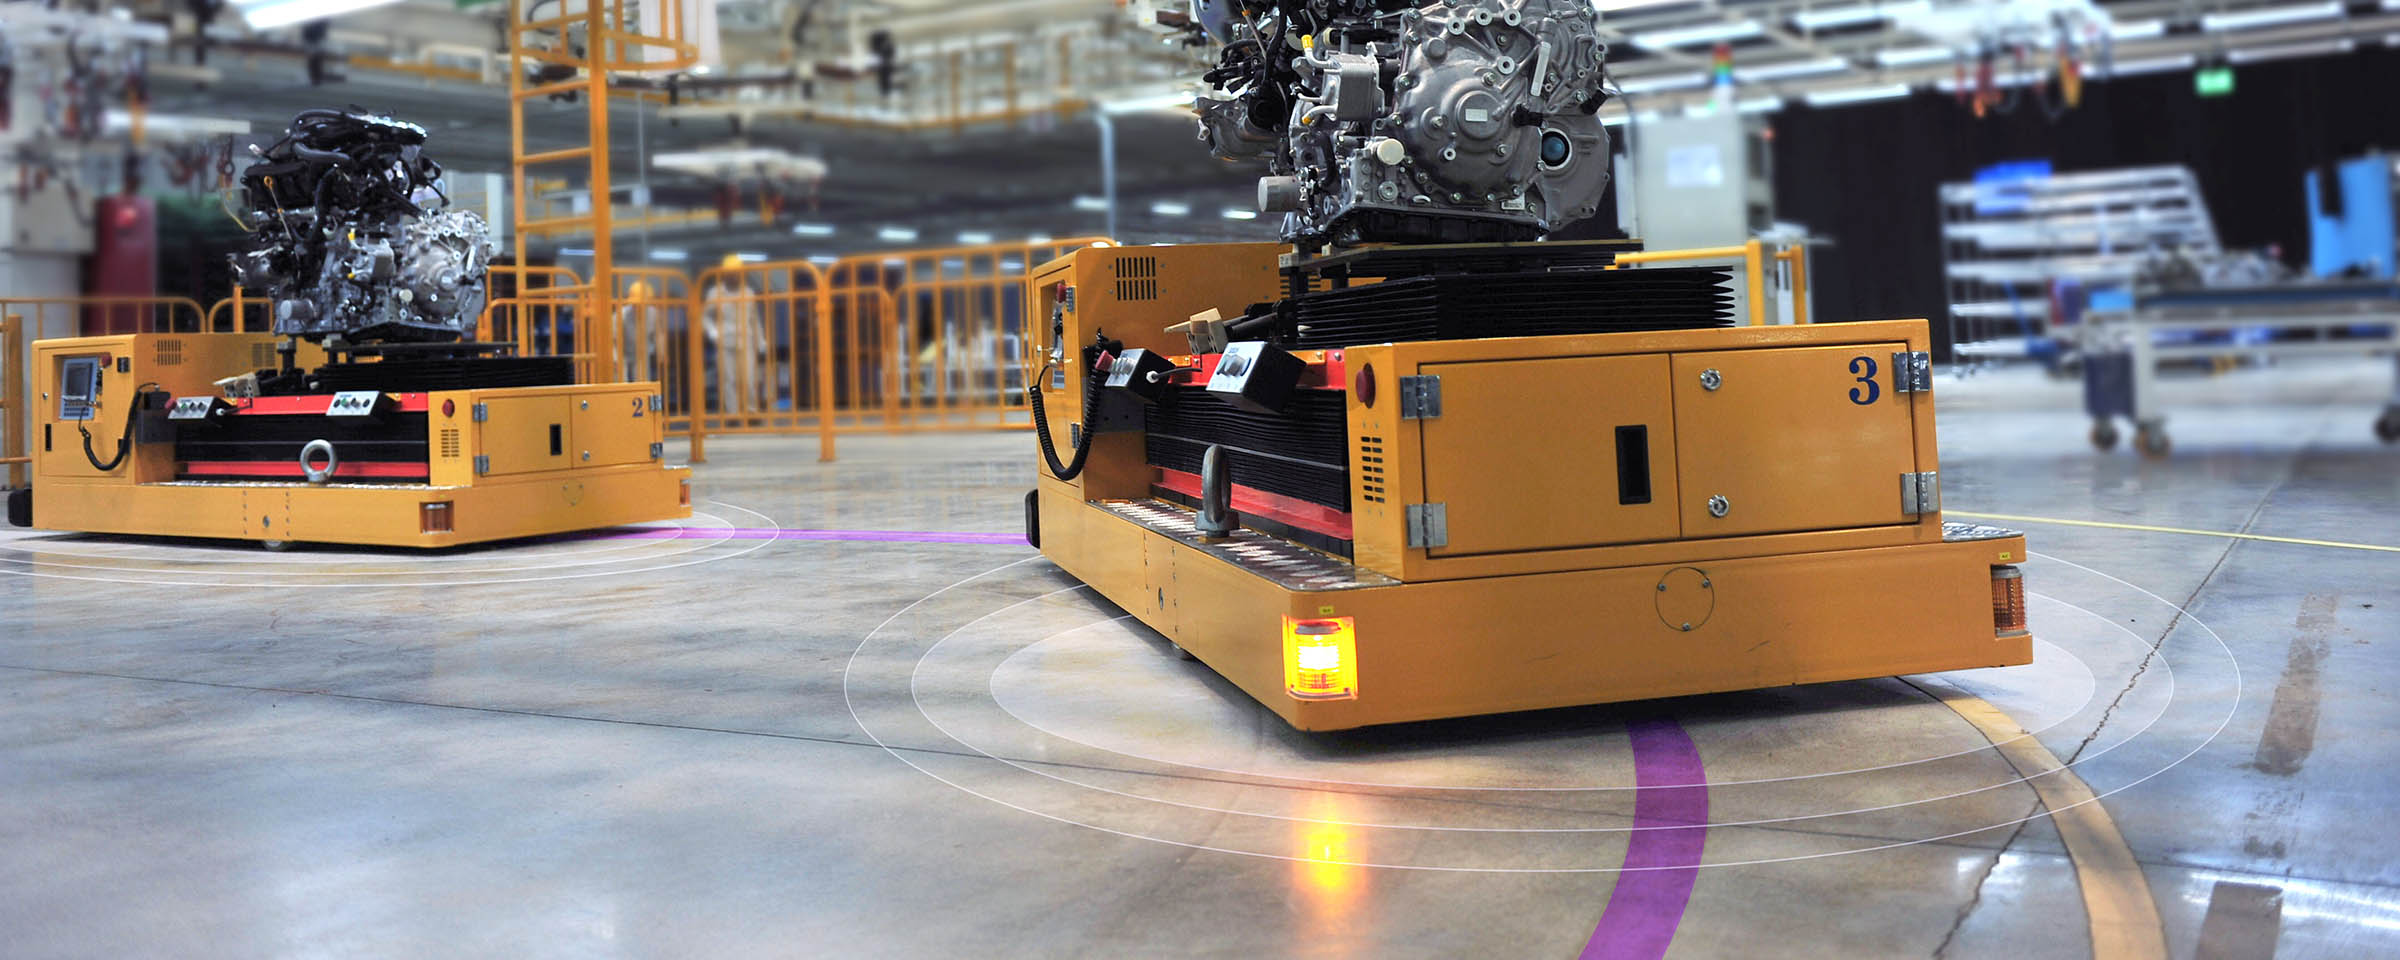 Autonomous guided vehicles in der Produktionshalle